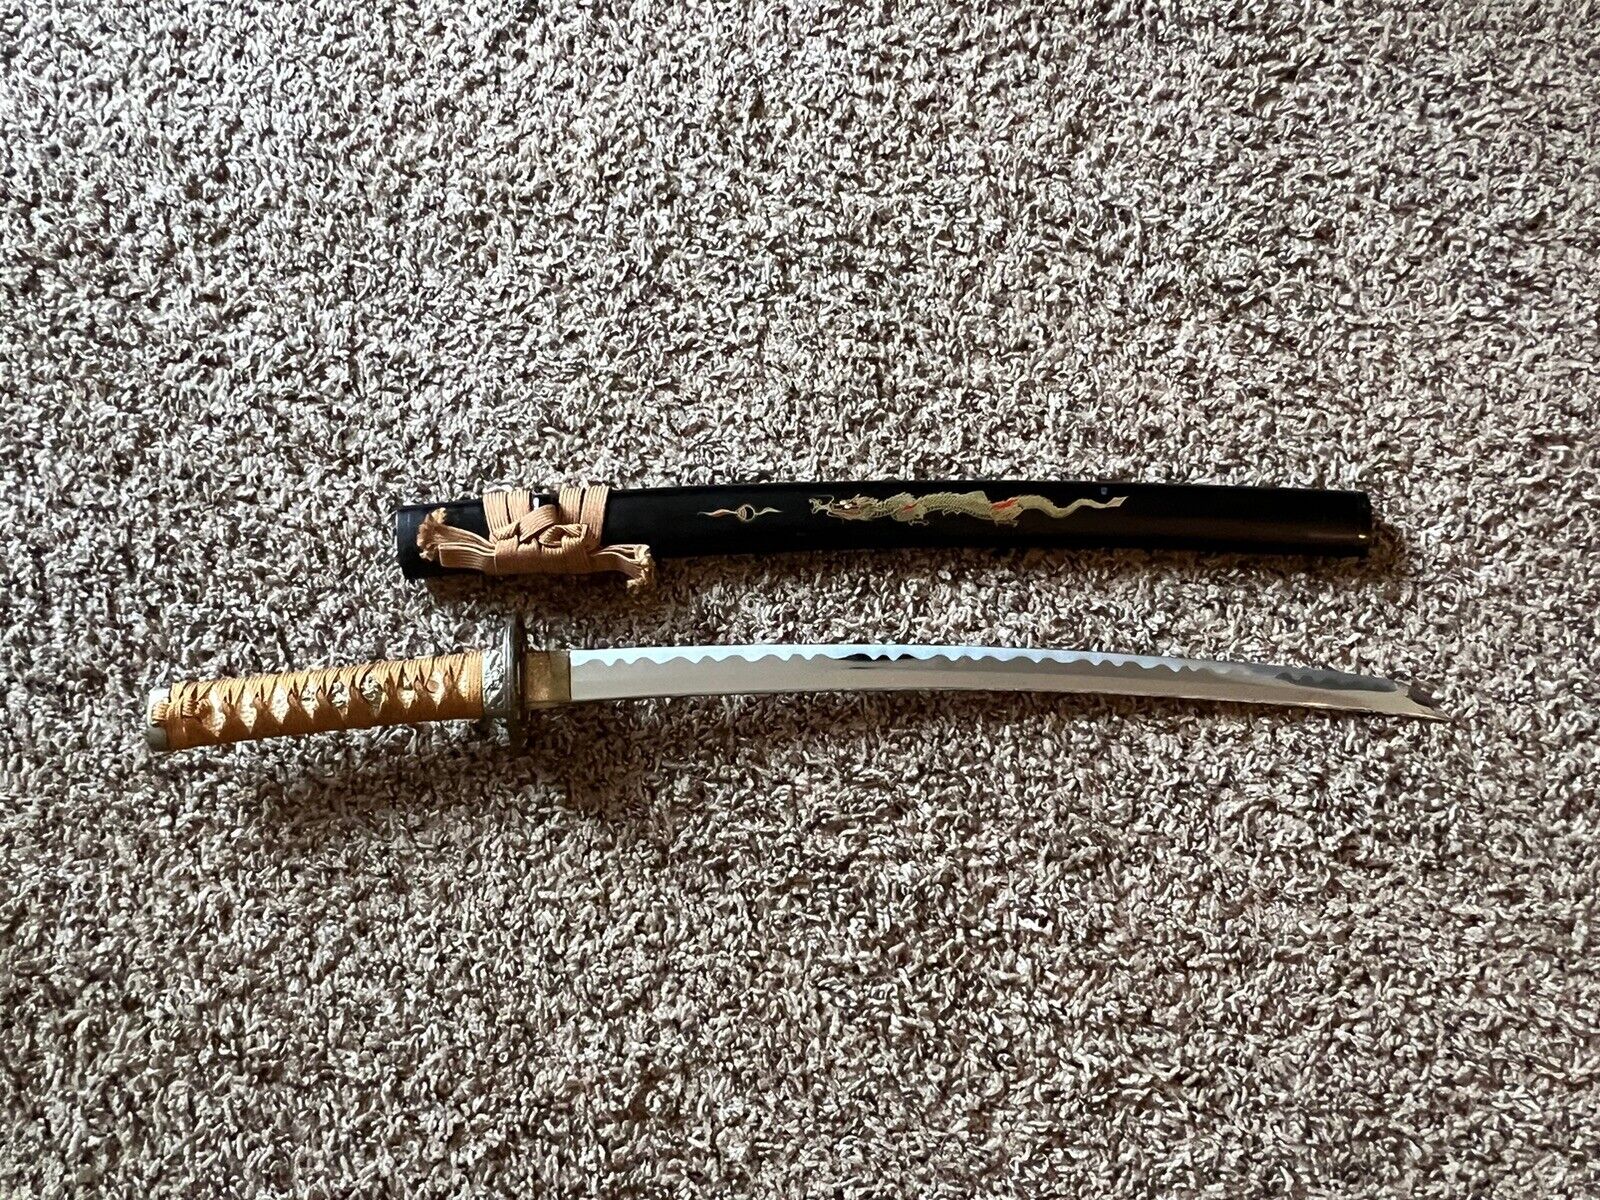 Japanese Iaito Katana Sword - unsharpened Iaido training sword 18” Blade